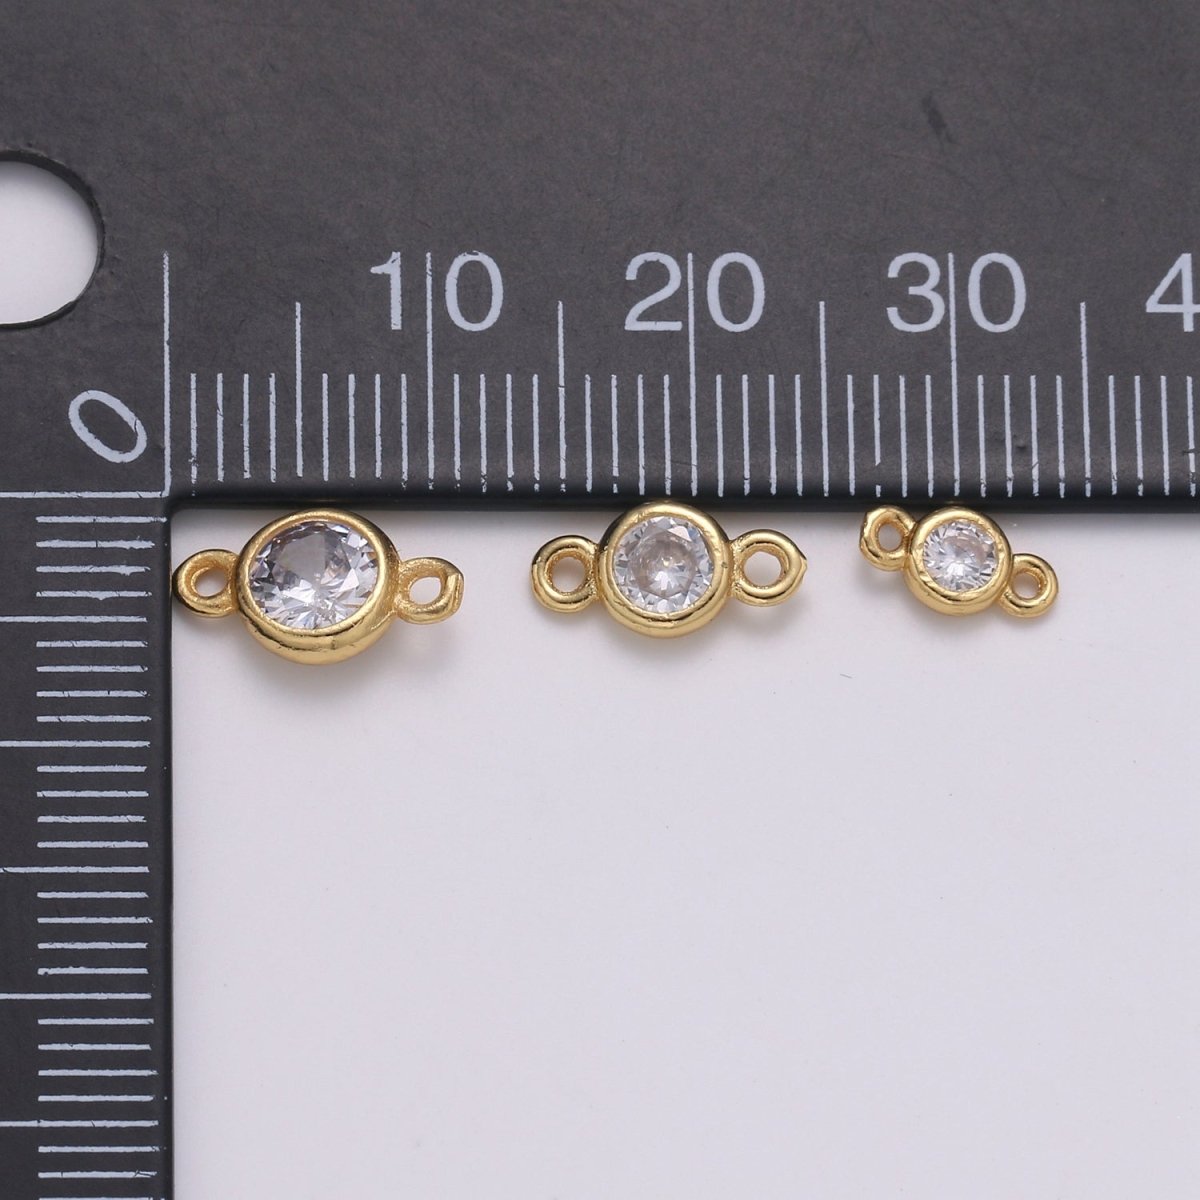 Gold Bezel 4,5,6mm CZ Connector Link 14k gold filled, Silver bezel set cubic zirconia link spacer for Necklace Bracelet Earring Supply F-586 to F-591 - DLUXCA